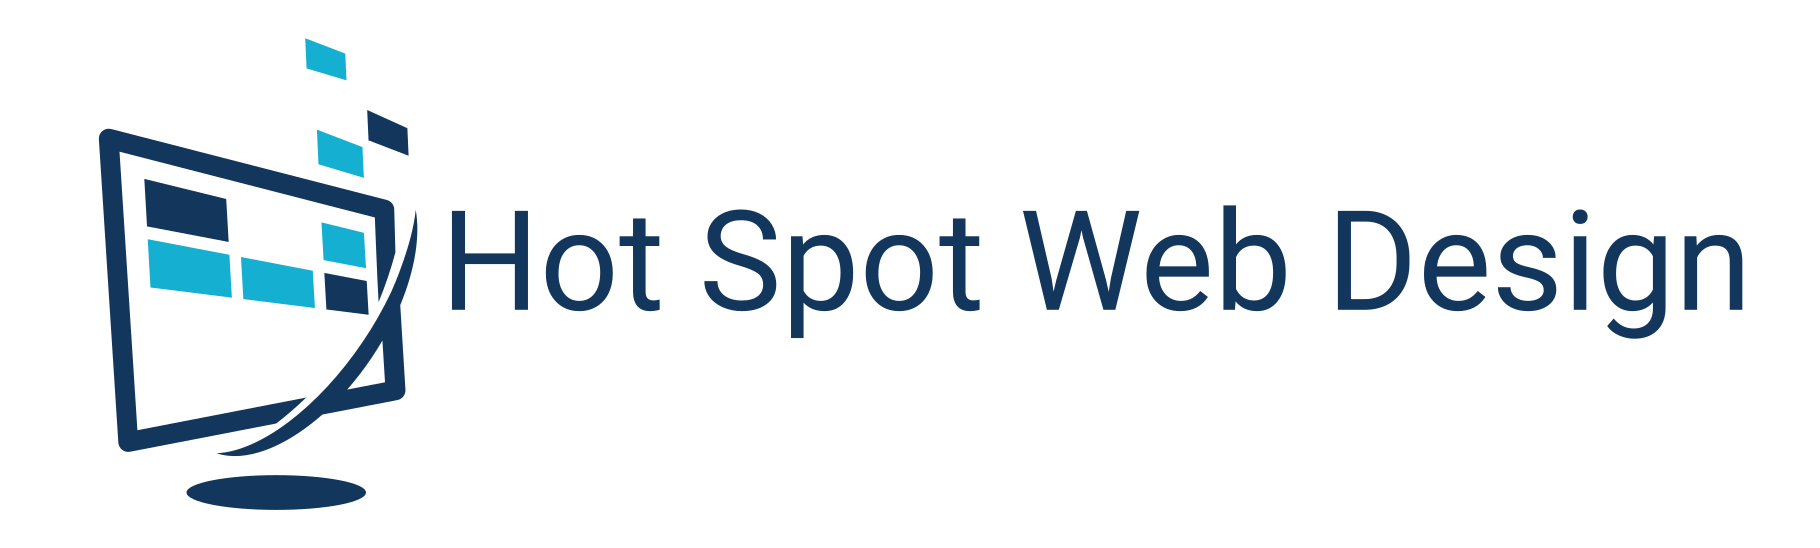 Hot Spot Web Design